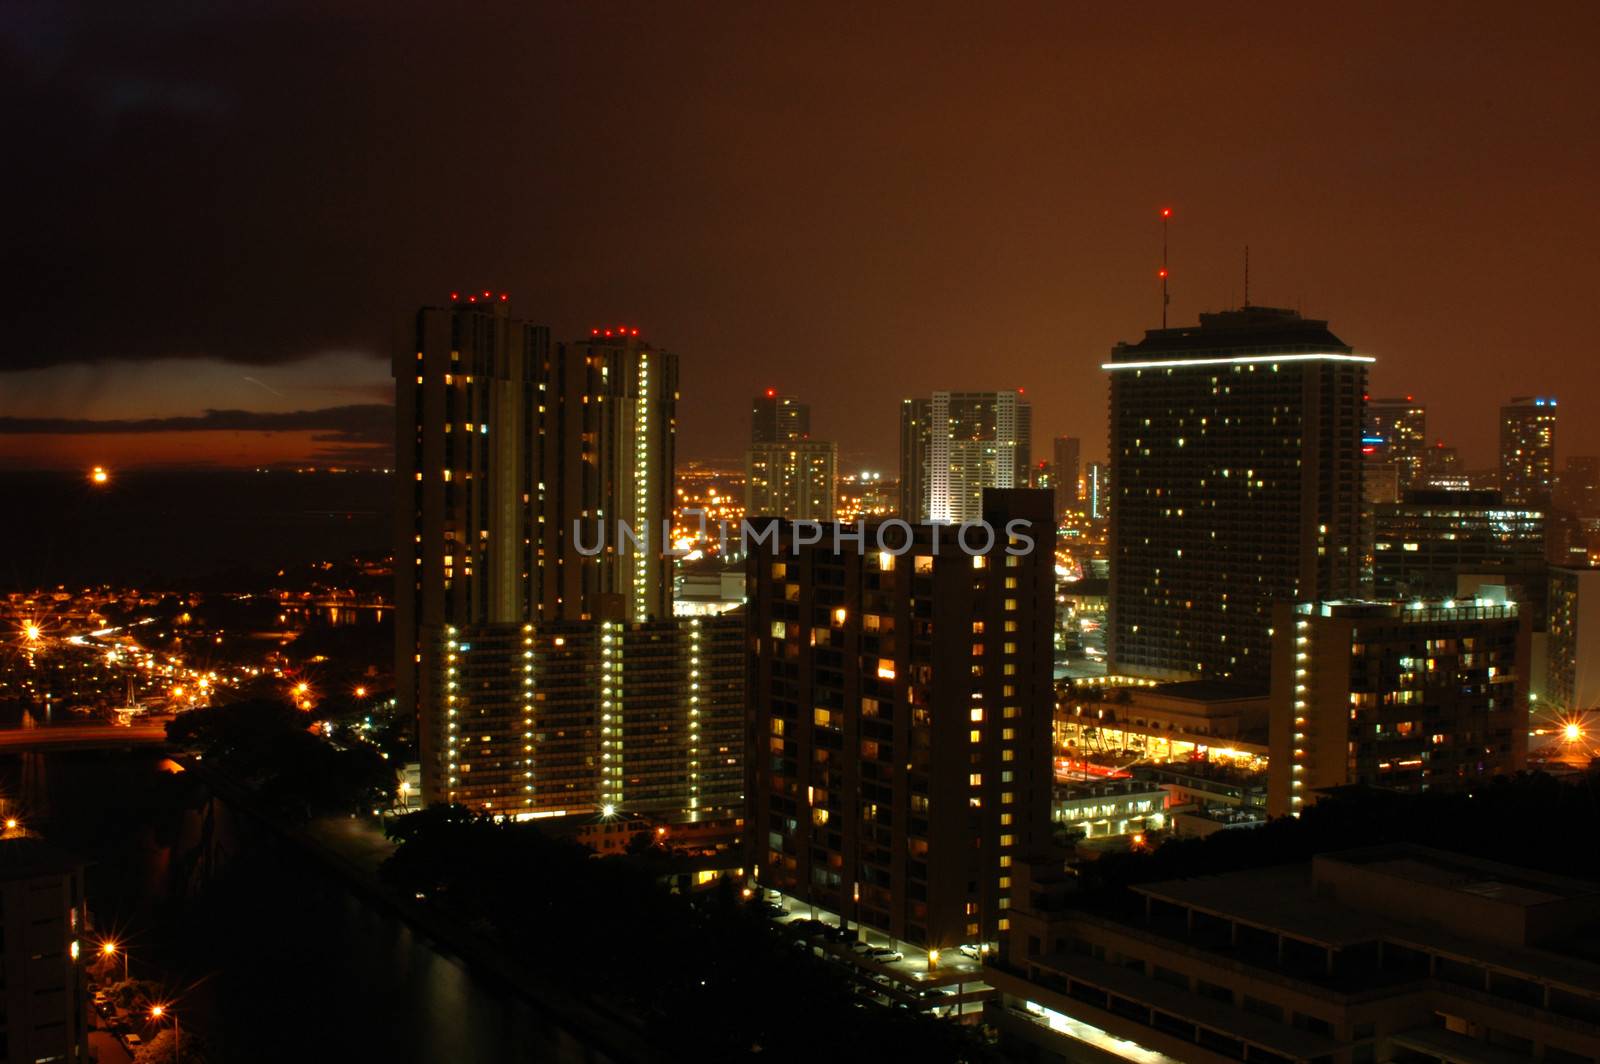 Honolulu At Night by mrdoomits